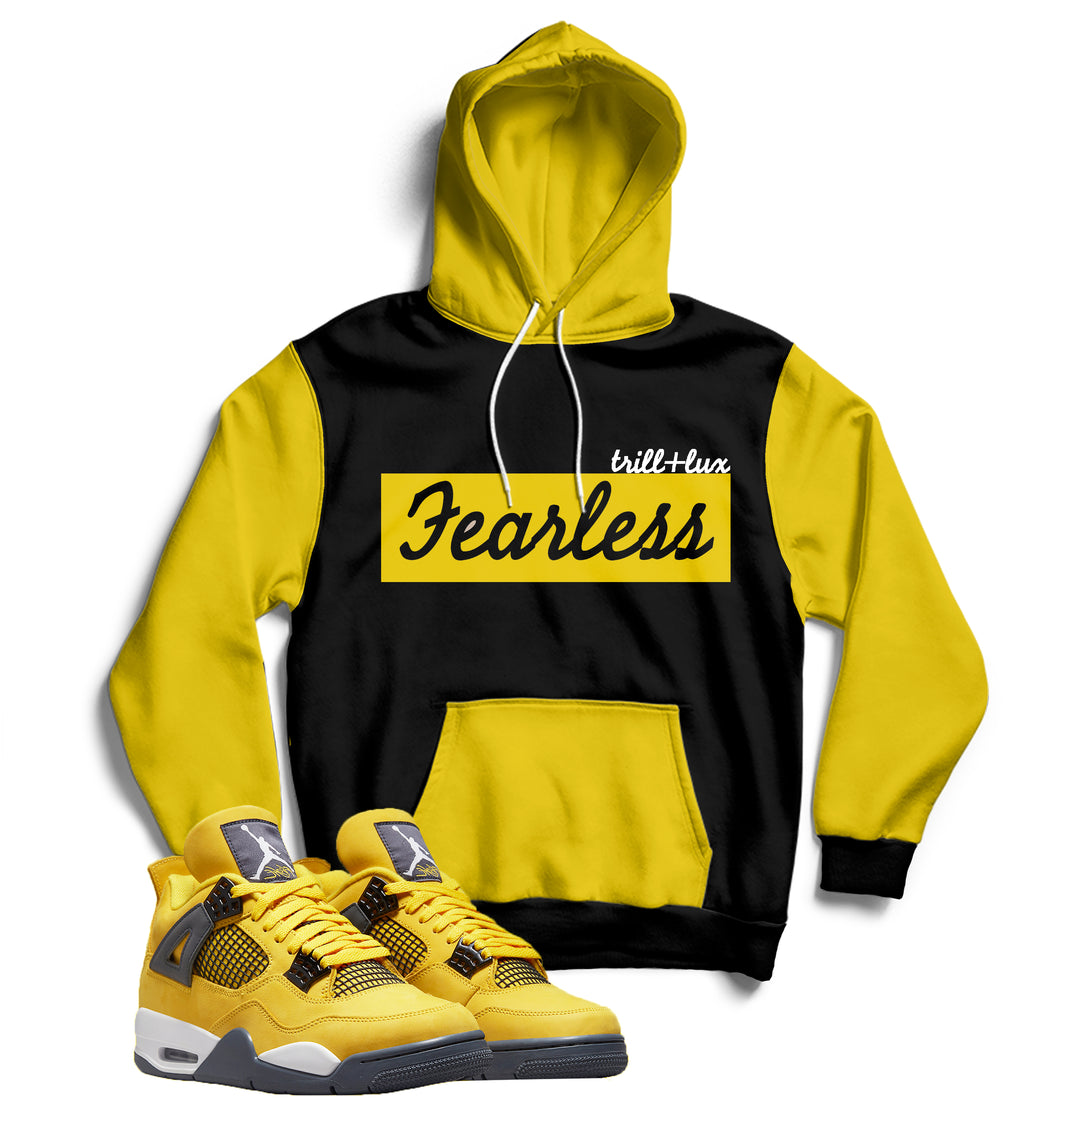 Fearless | Air Jordan 4 Tour Yellow Lightning Inspired Hoodie |